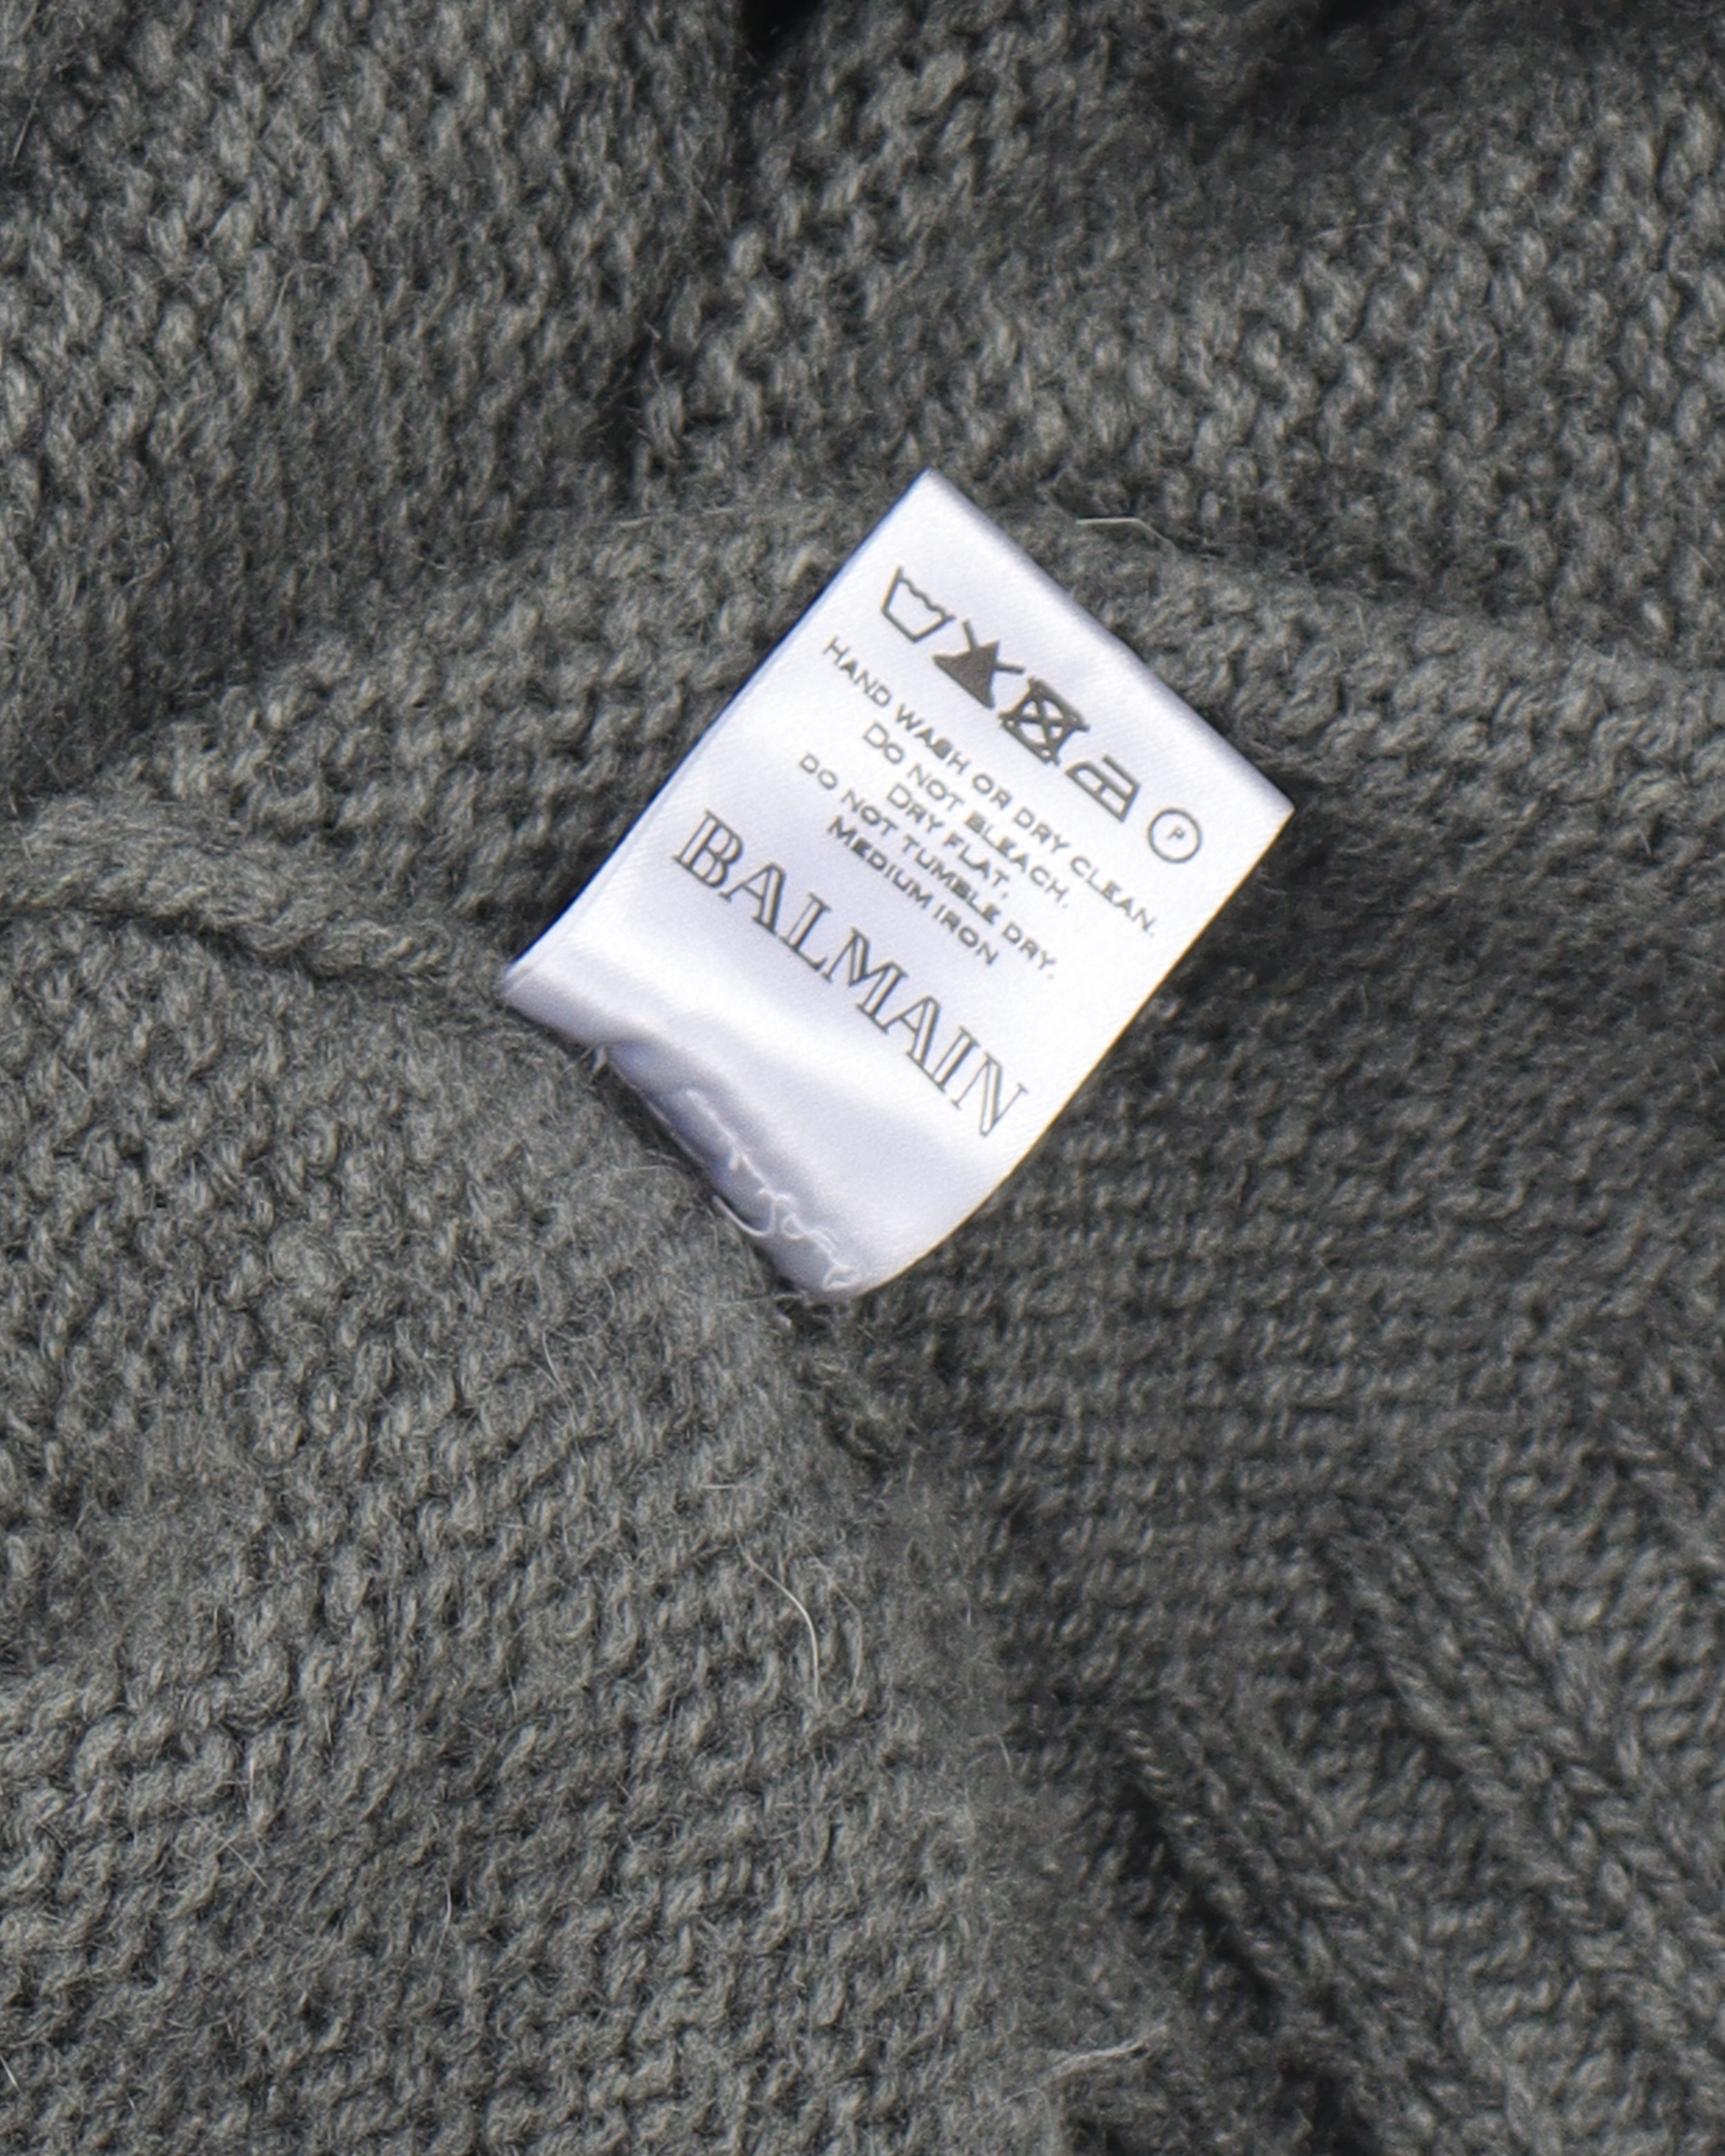 Grey Knit Cashmere Cardigan Sweater